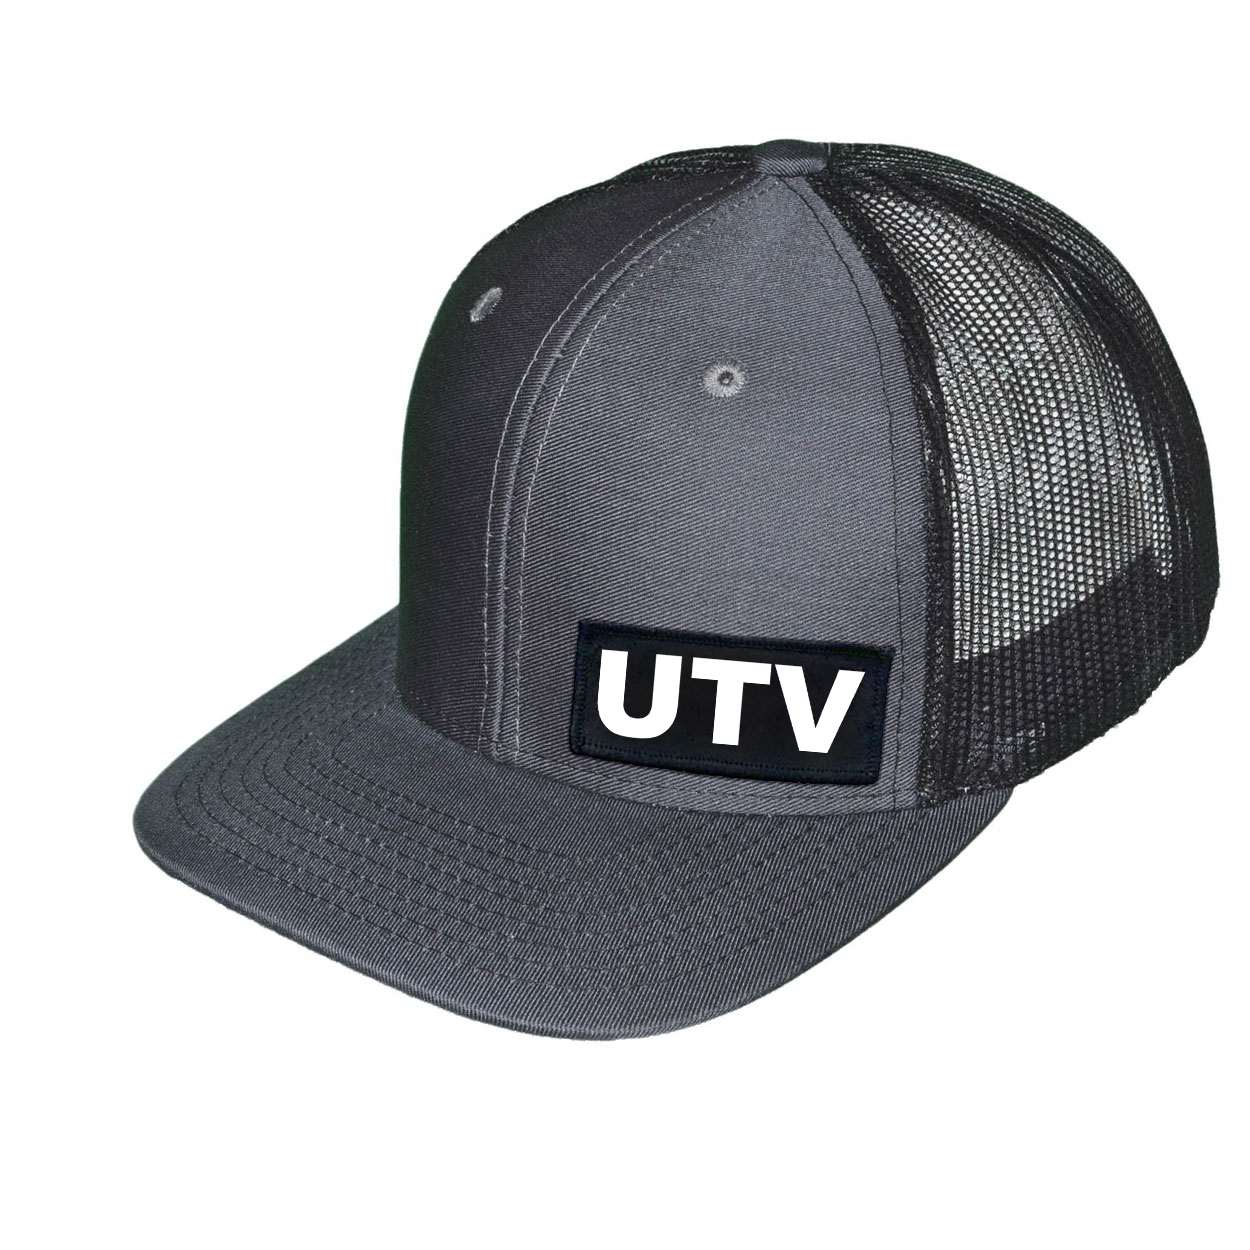 Utv Brand Logo Night Out Woven Patch Snapback Trucker Hat Dark Gray/Black